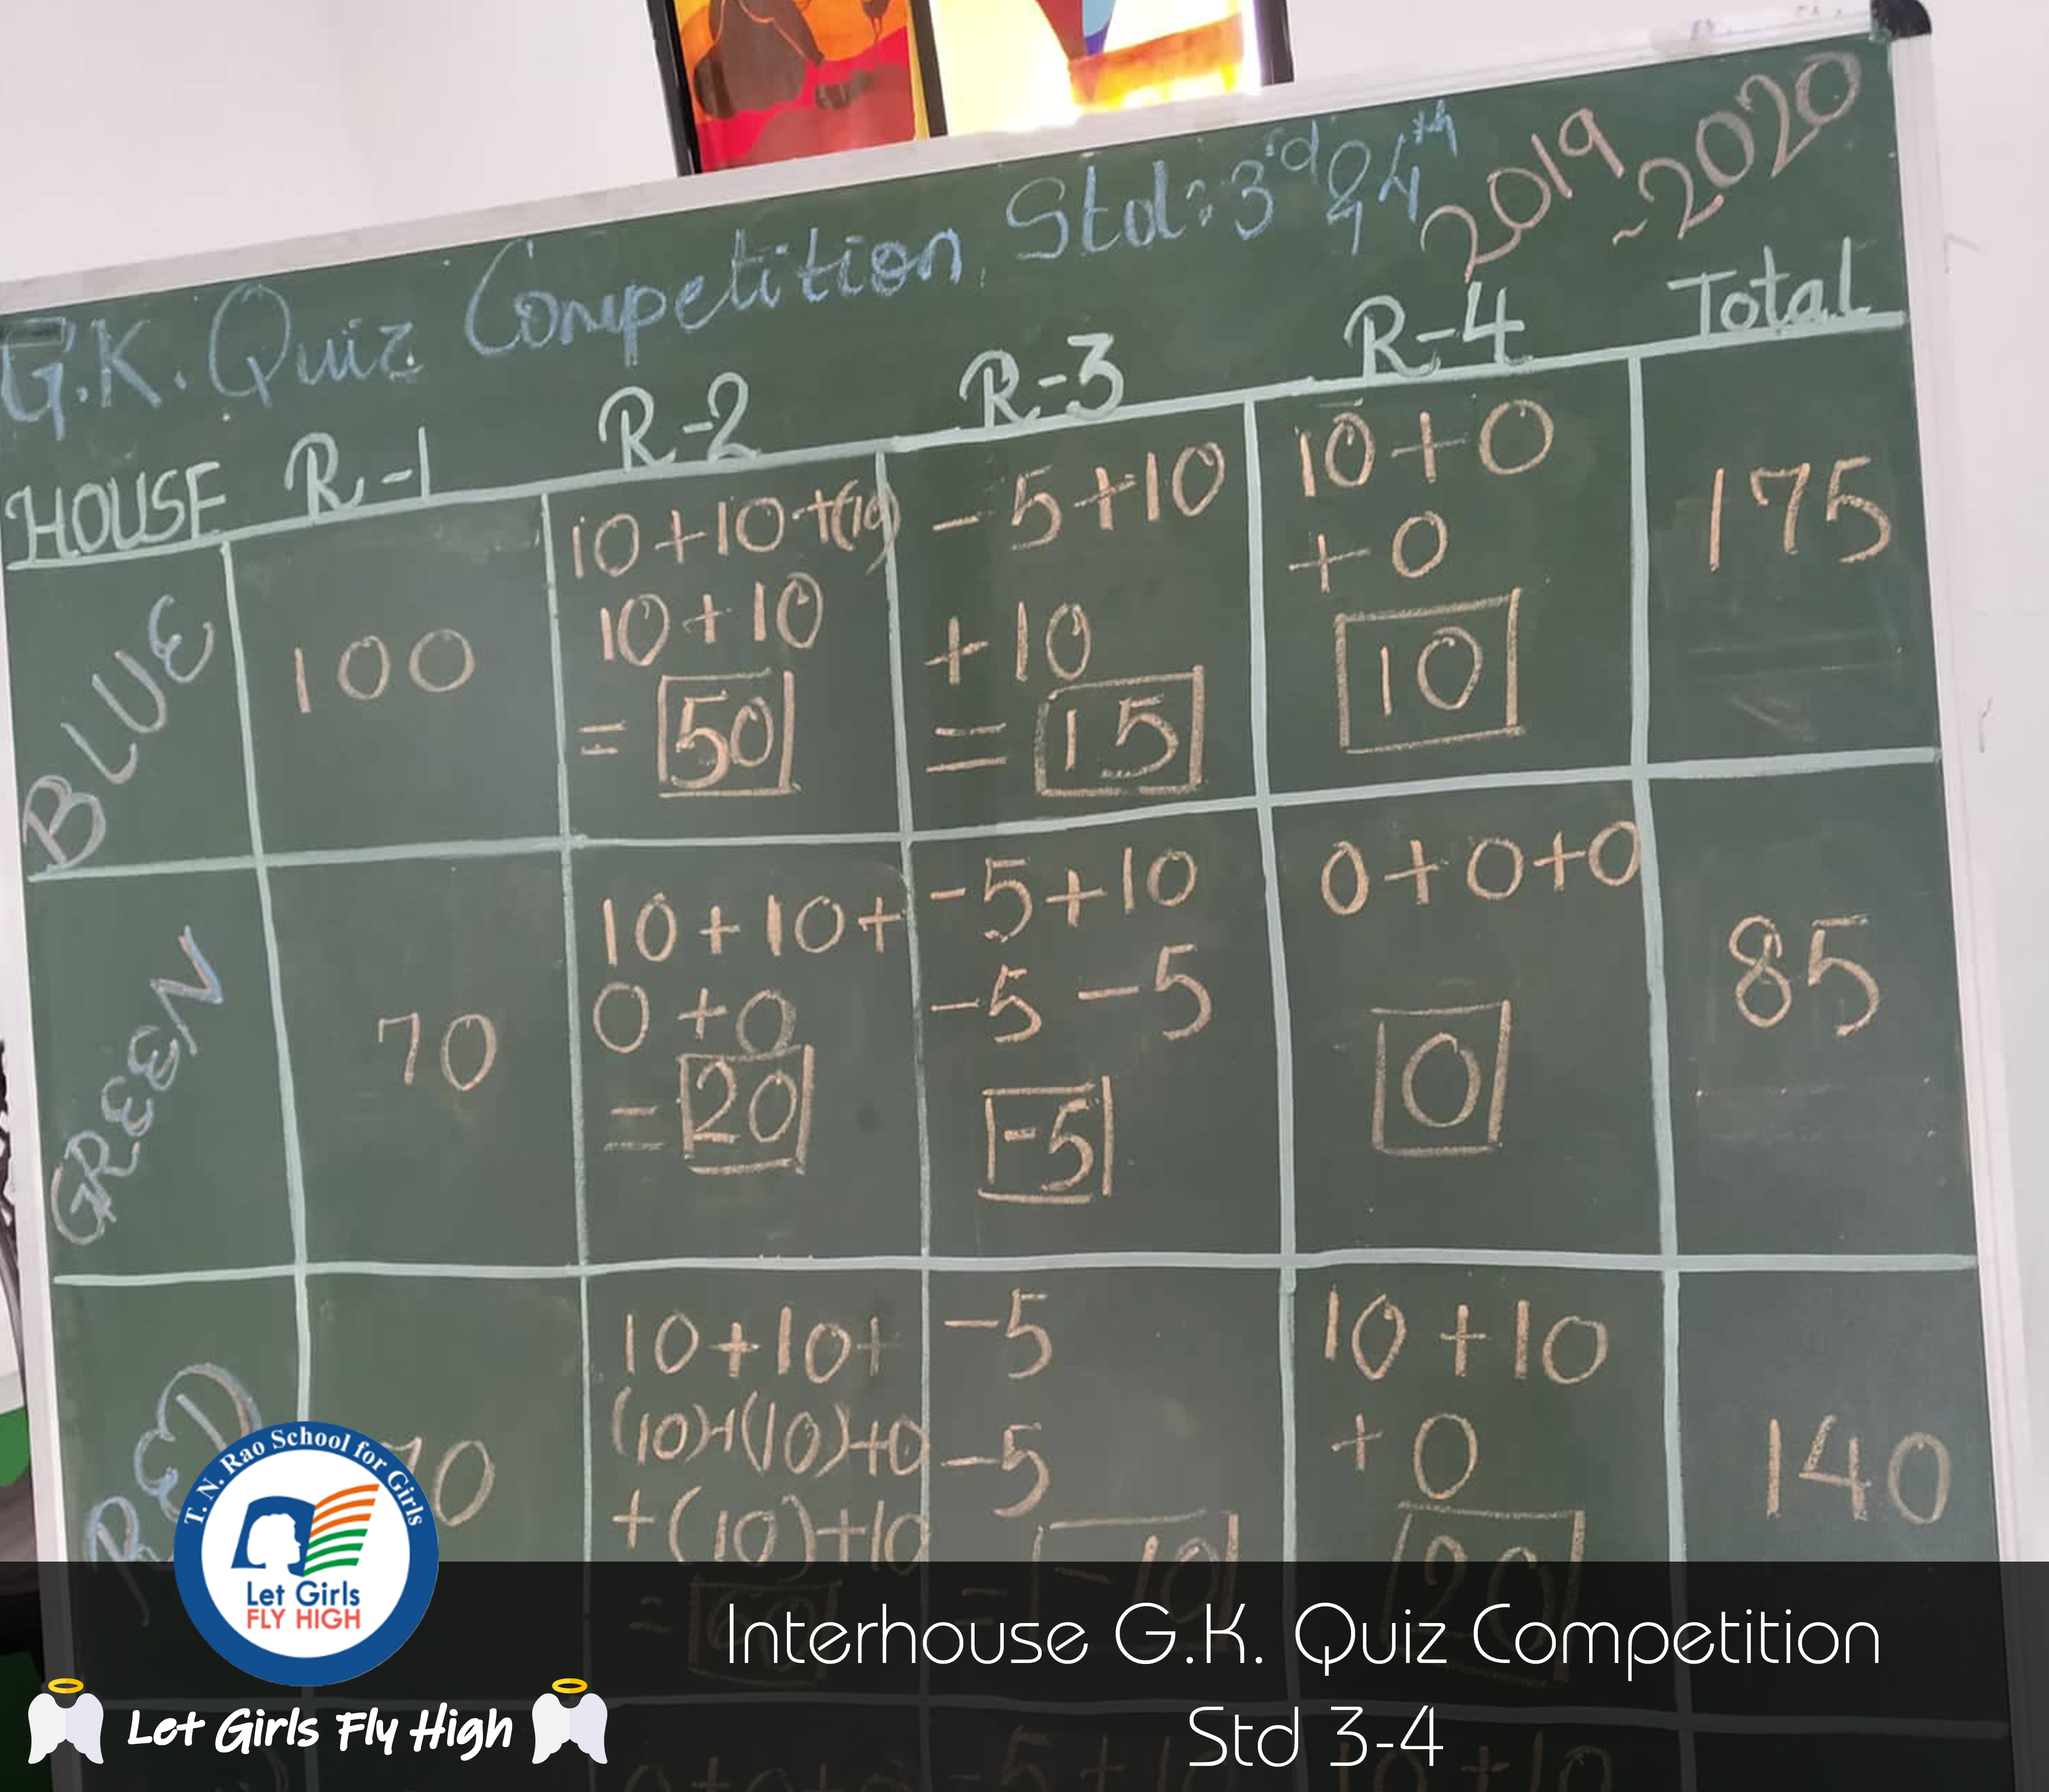 Interhouse G.K. Quiz Competition - T.N.Rao School